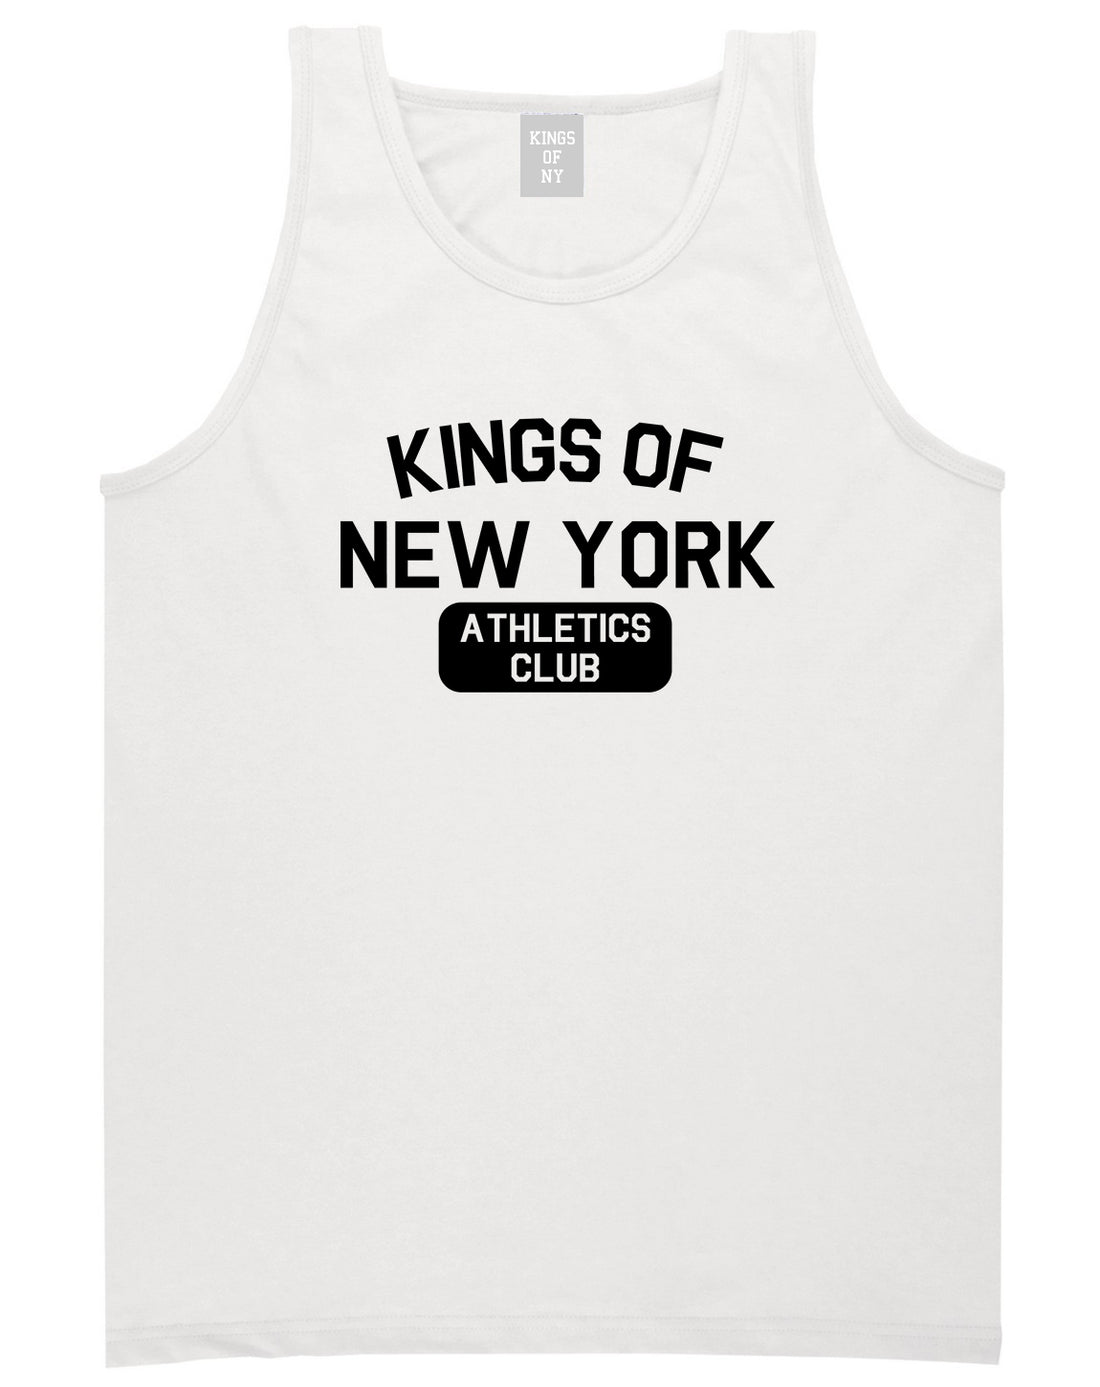 Kings Of New York Athletics Club Mens Tank Top Shirt White